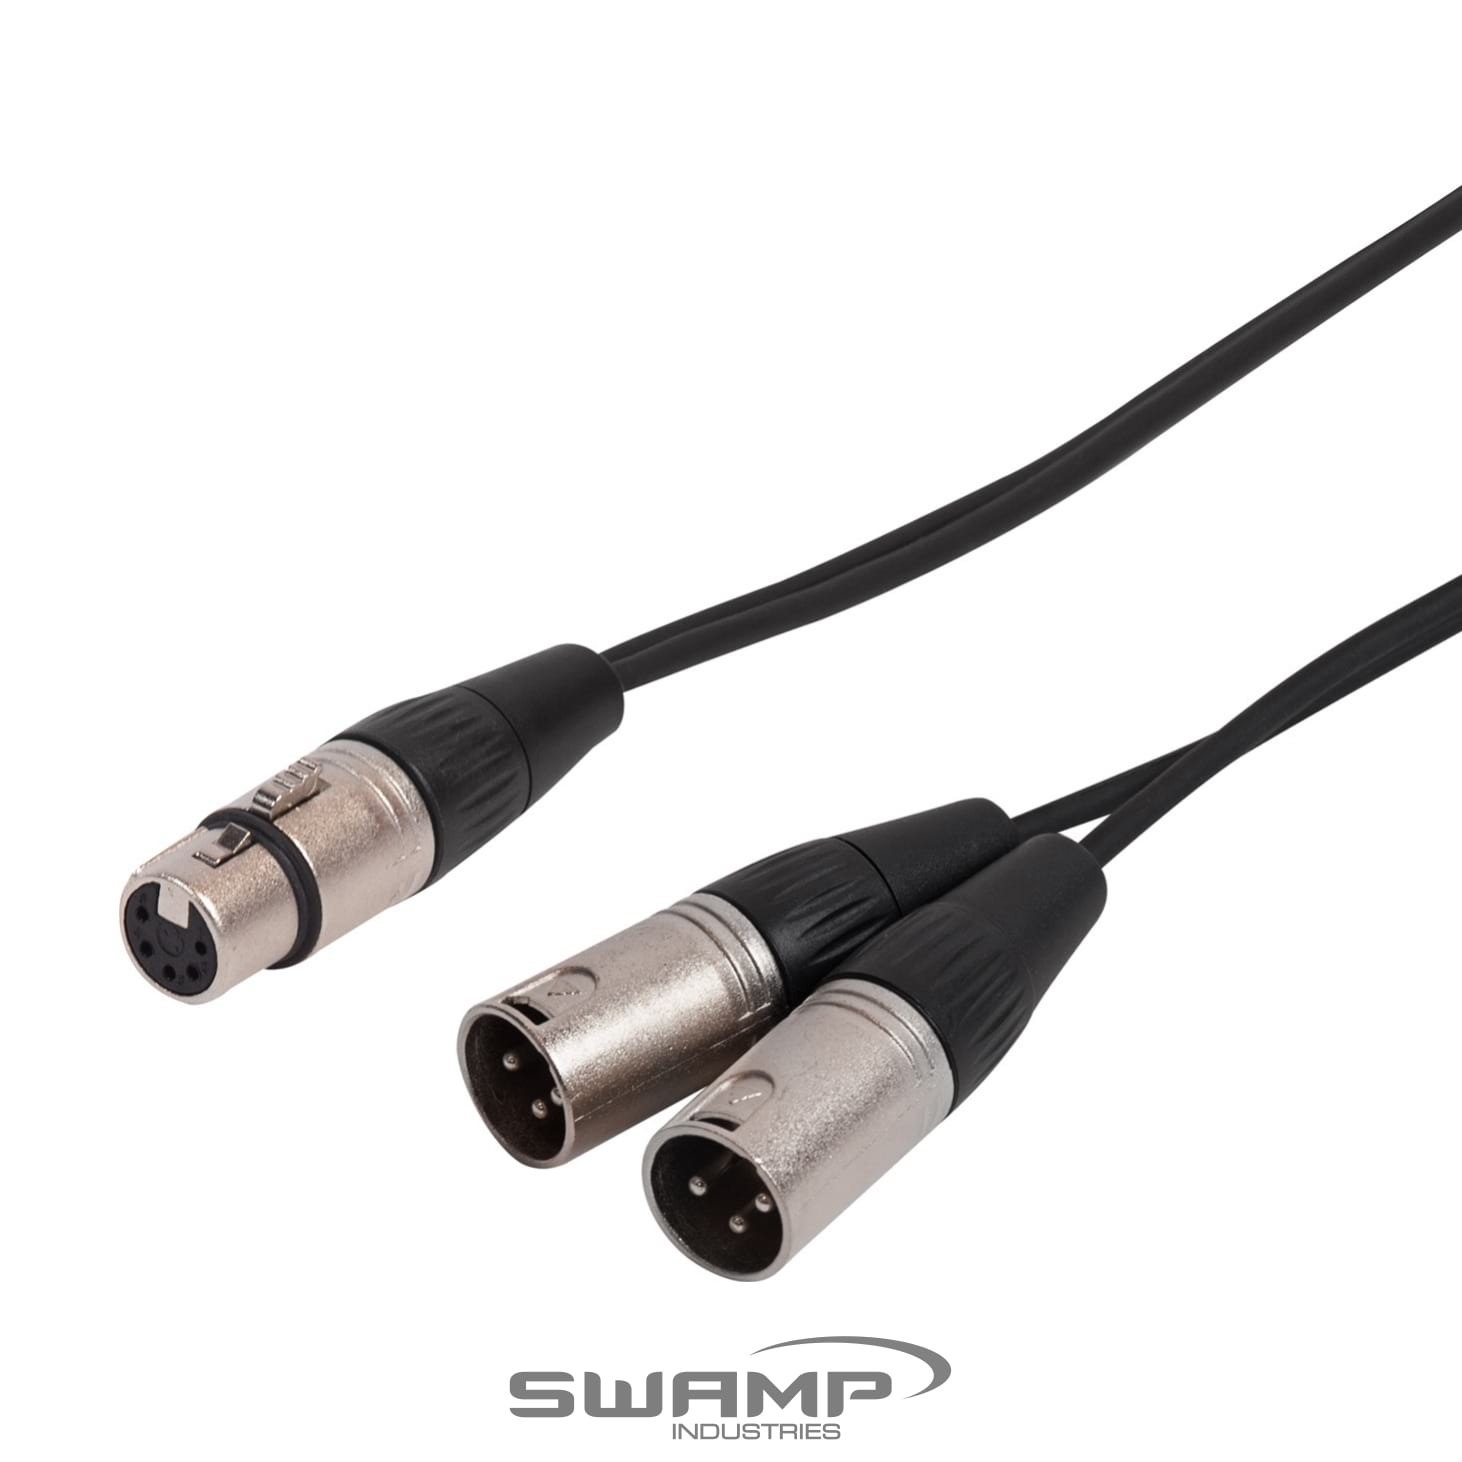 Microphone Signal Splitter XLR Y-Cable - Balanced - Pro Quality XLR Connectors